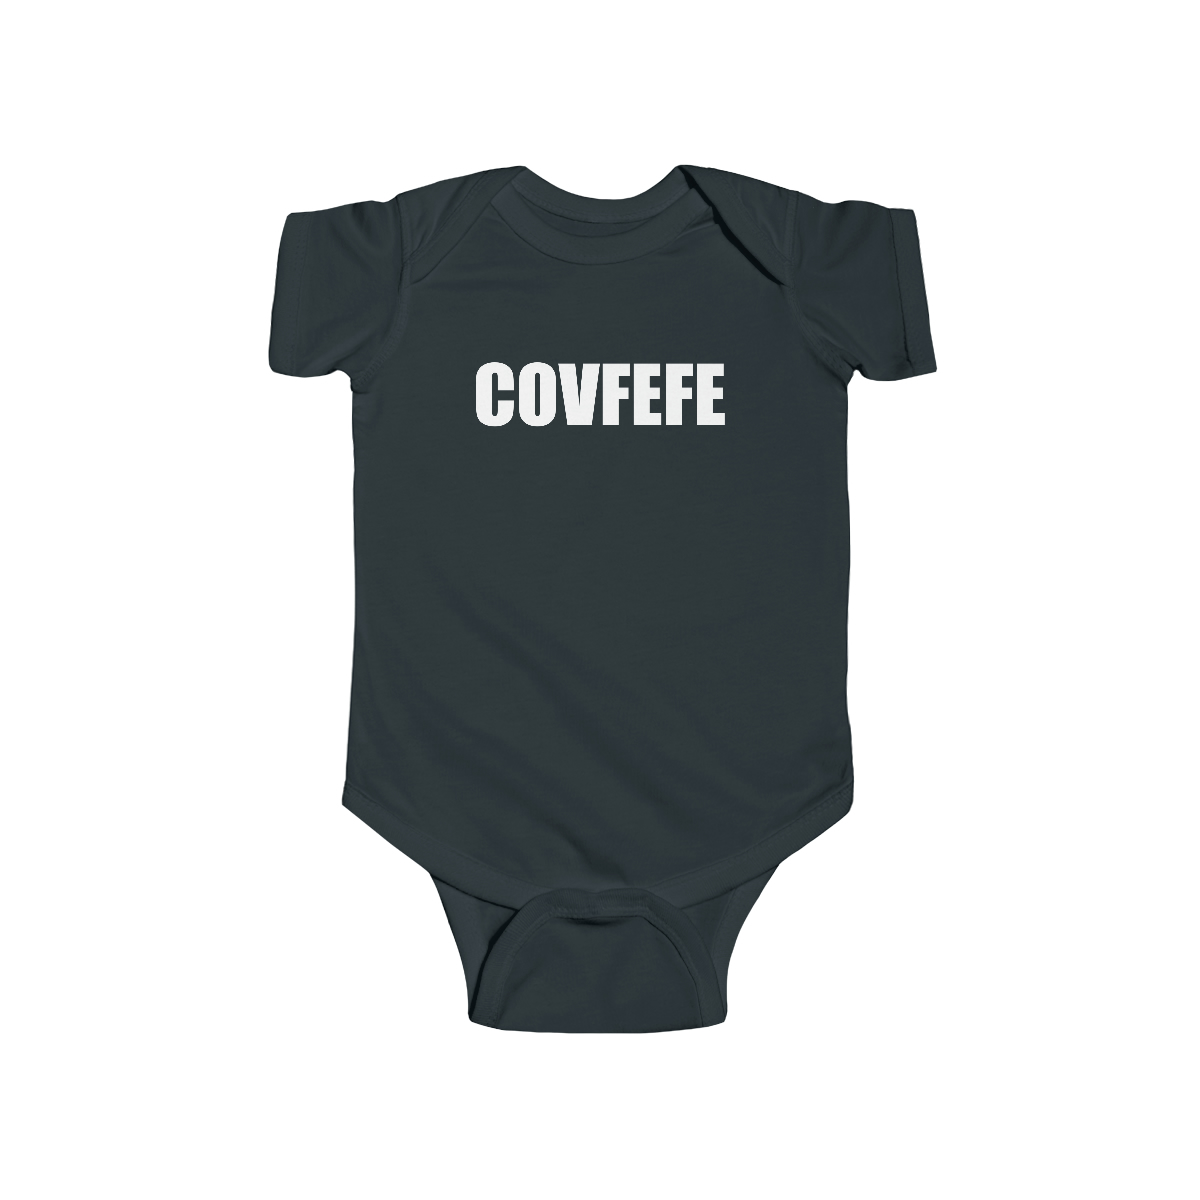 COVFEFE Baby Infant Fine Jersey Bodysuit Onesie by Trump is Punk Rock